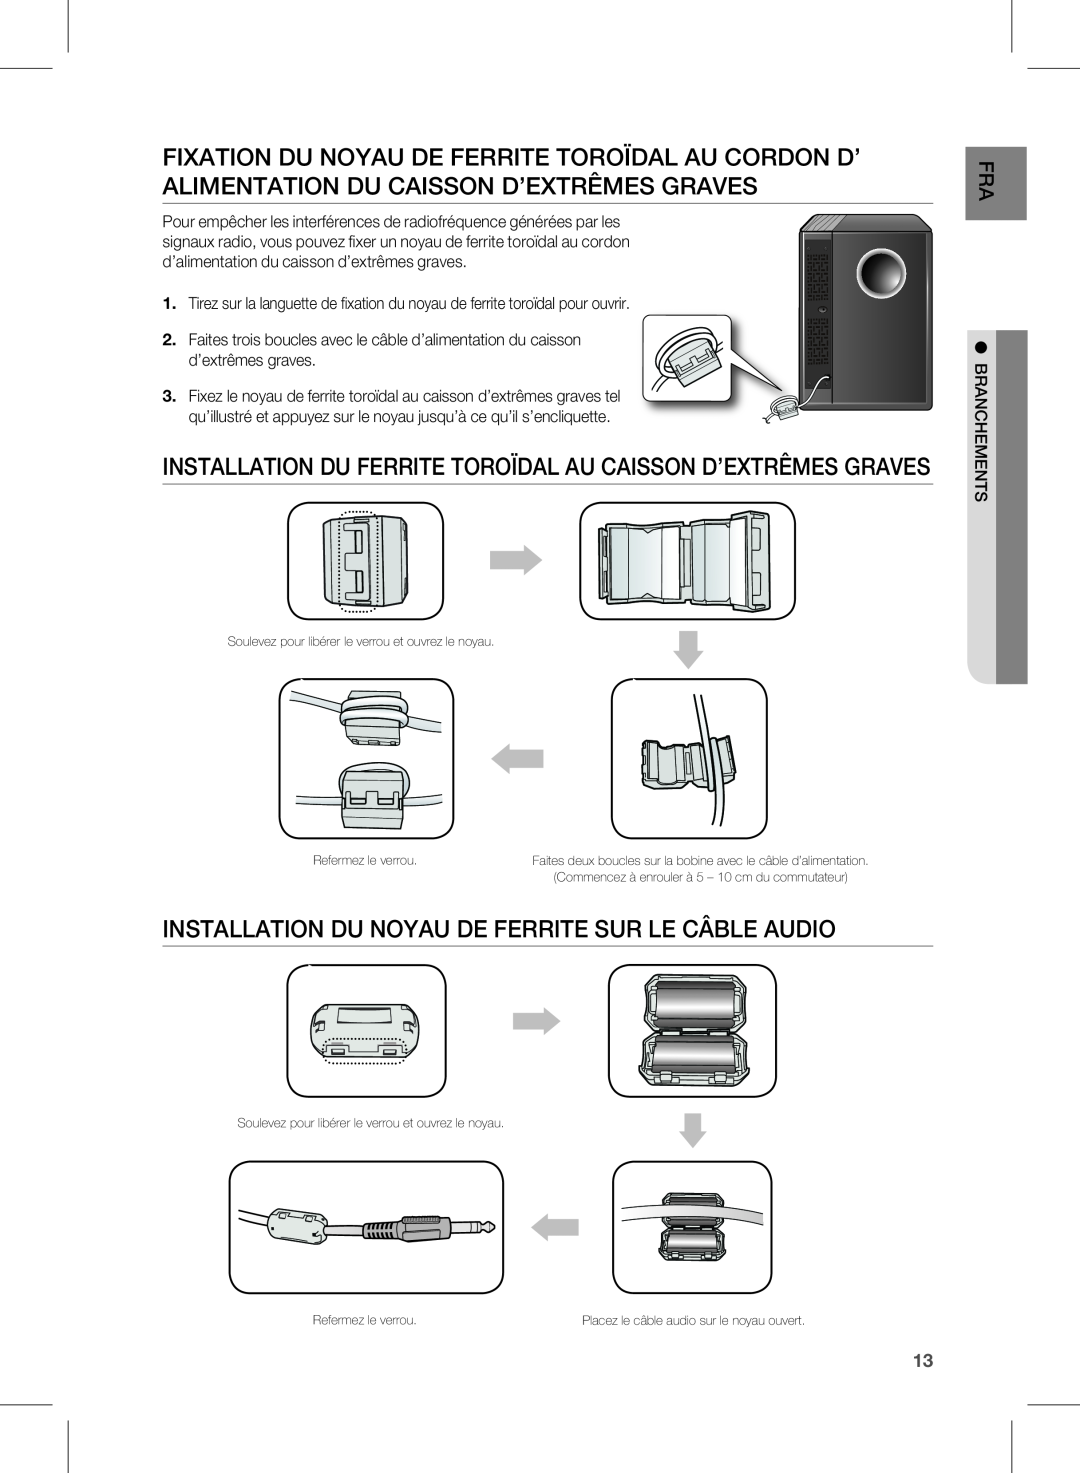 Samsung HW-D451, HW-D450 user manual bRAnchements 